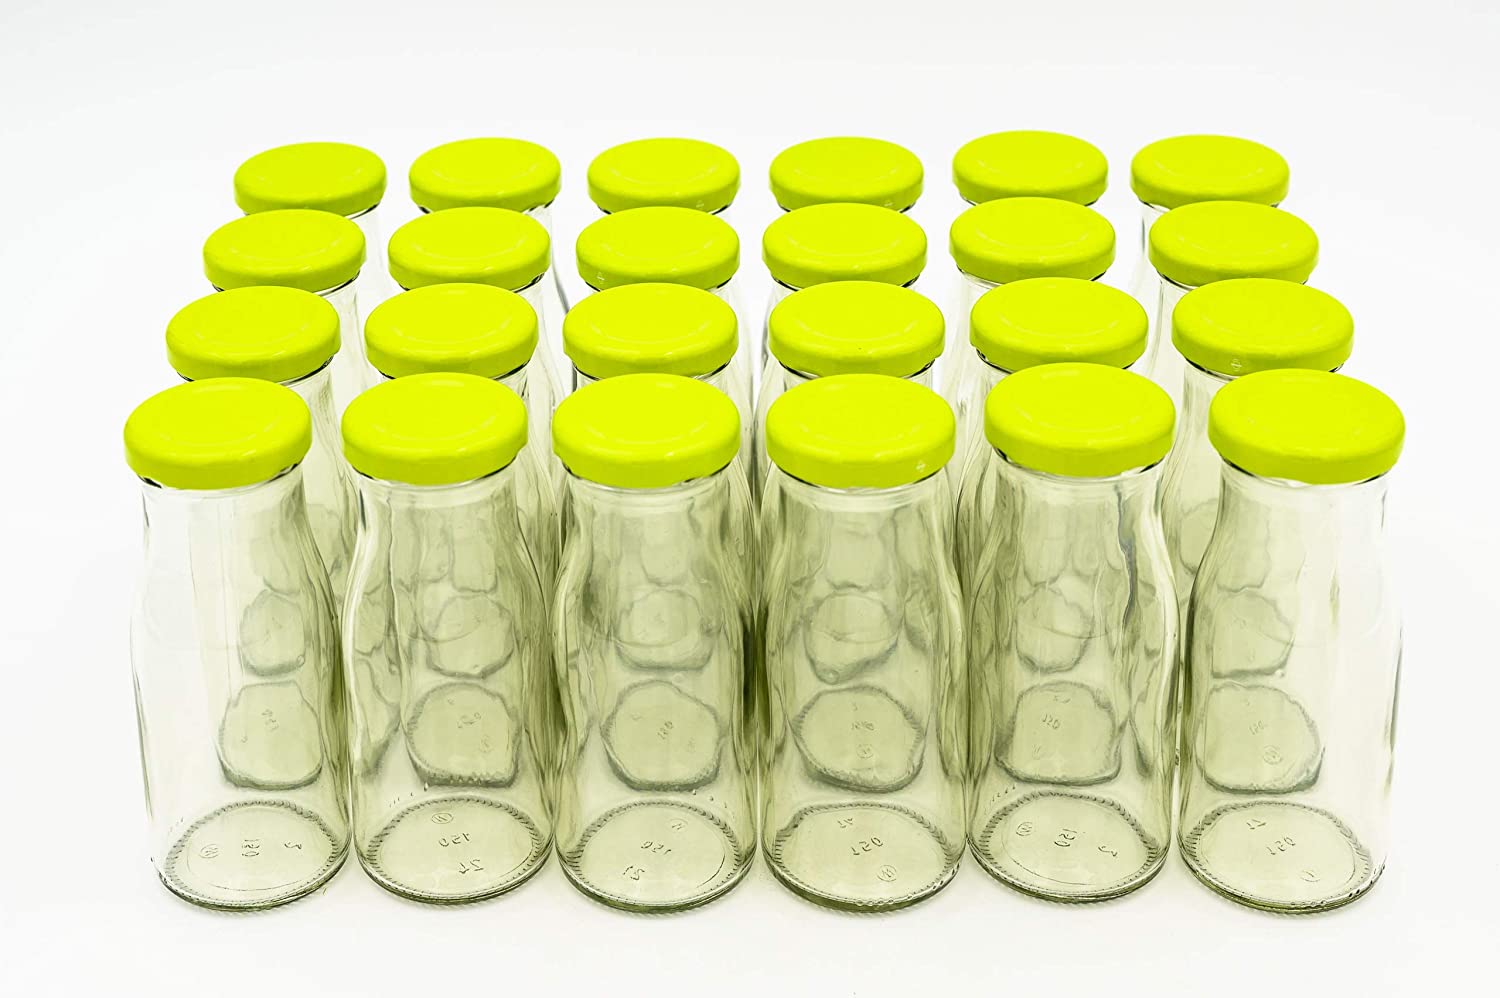 flaschenbauer.de 24 Empty Bottles, Small Glass Bottles 150 ml White TO43 with Light Green Cap